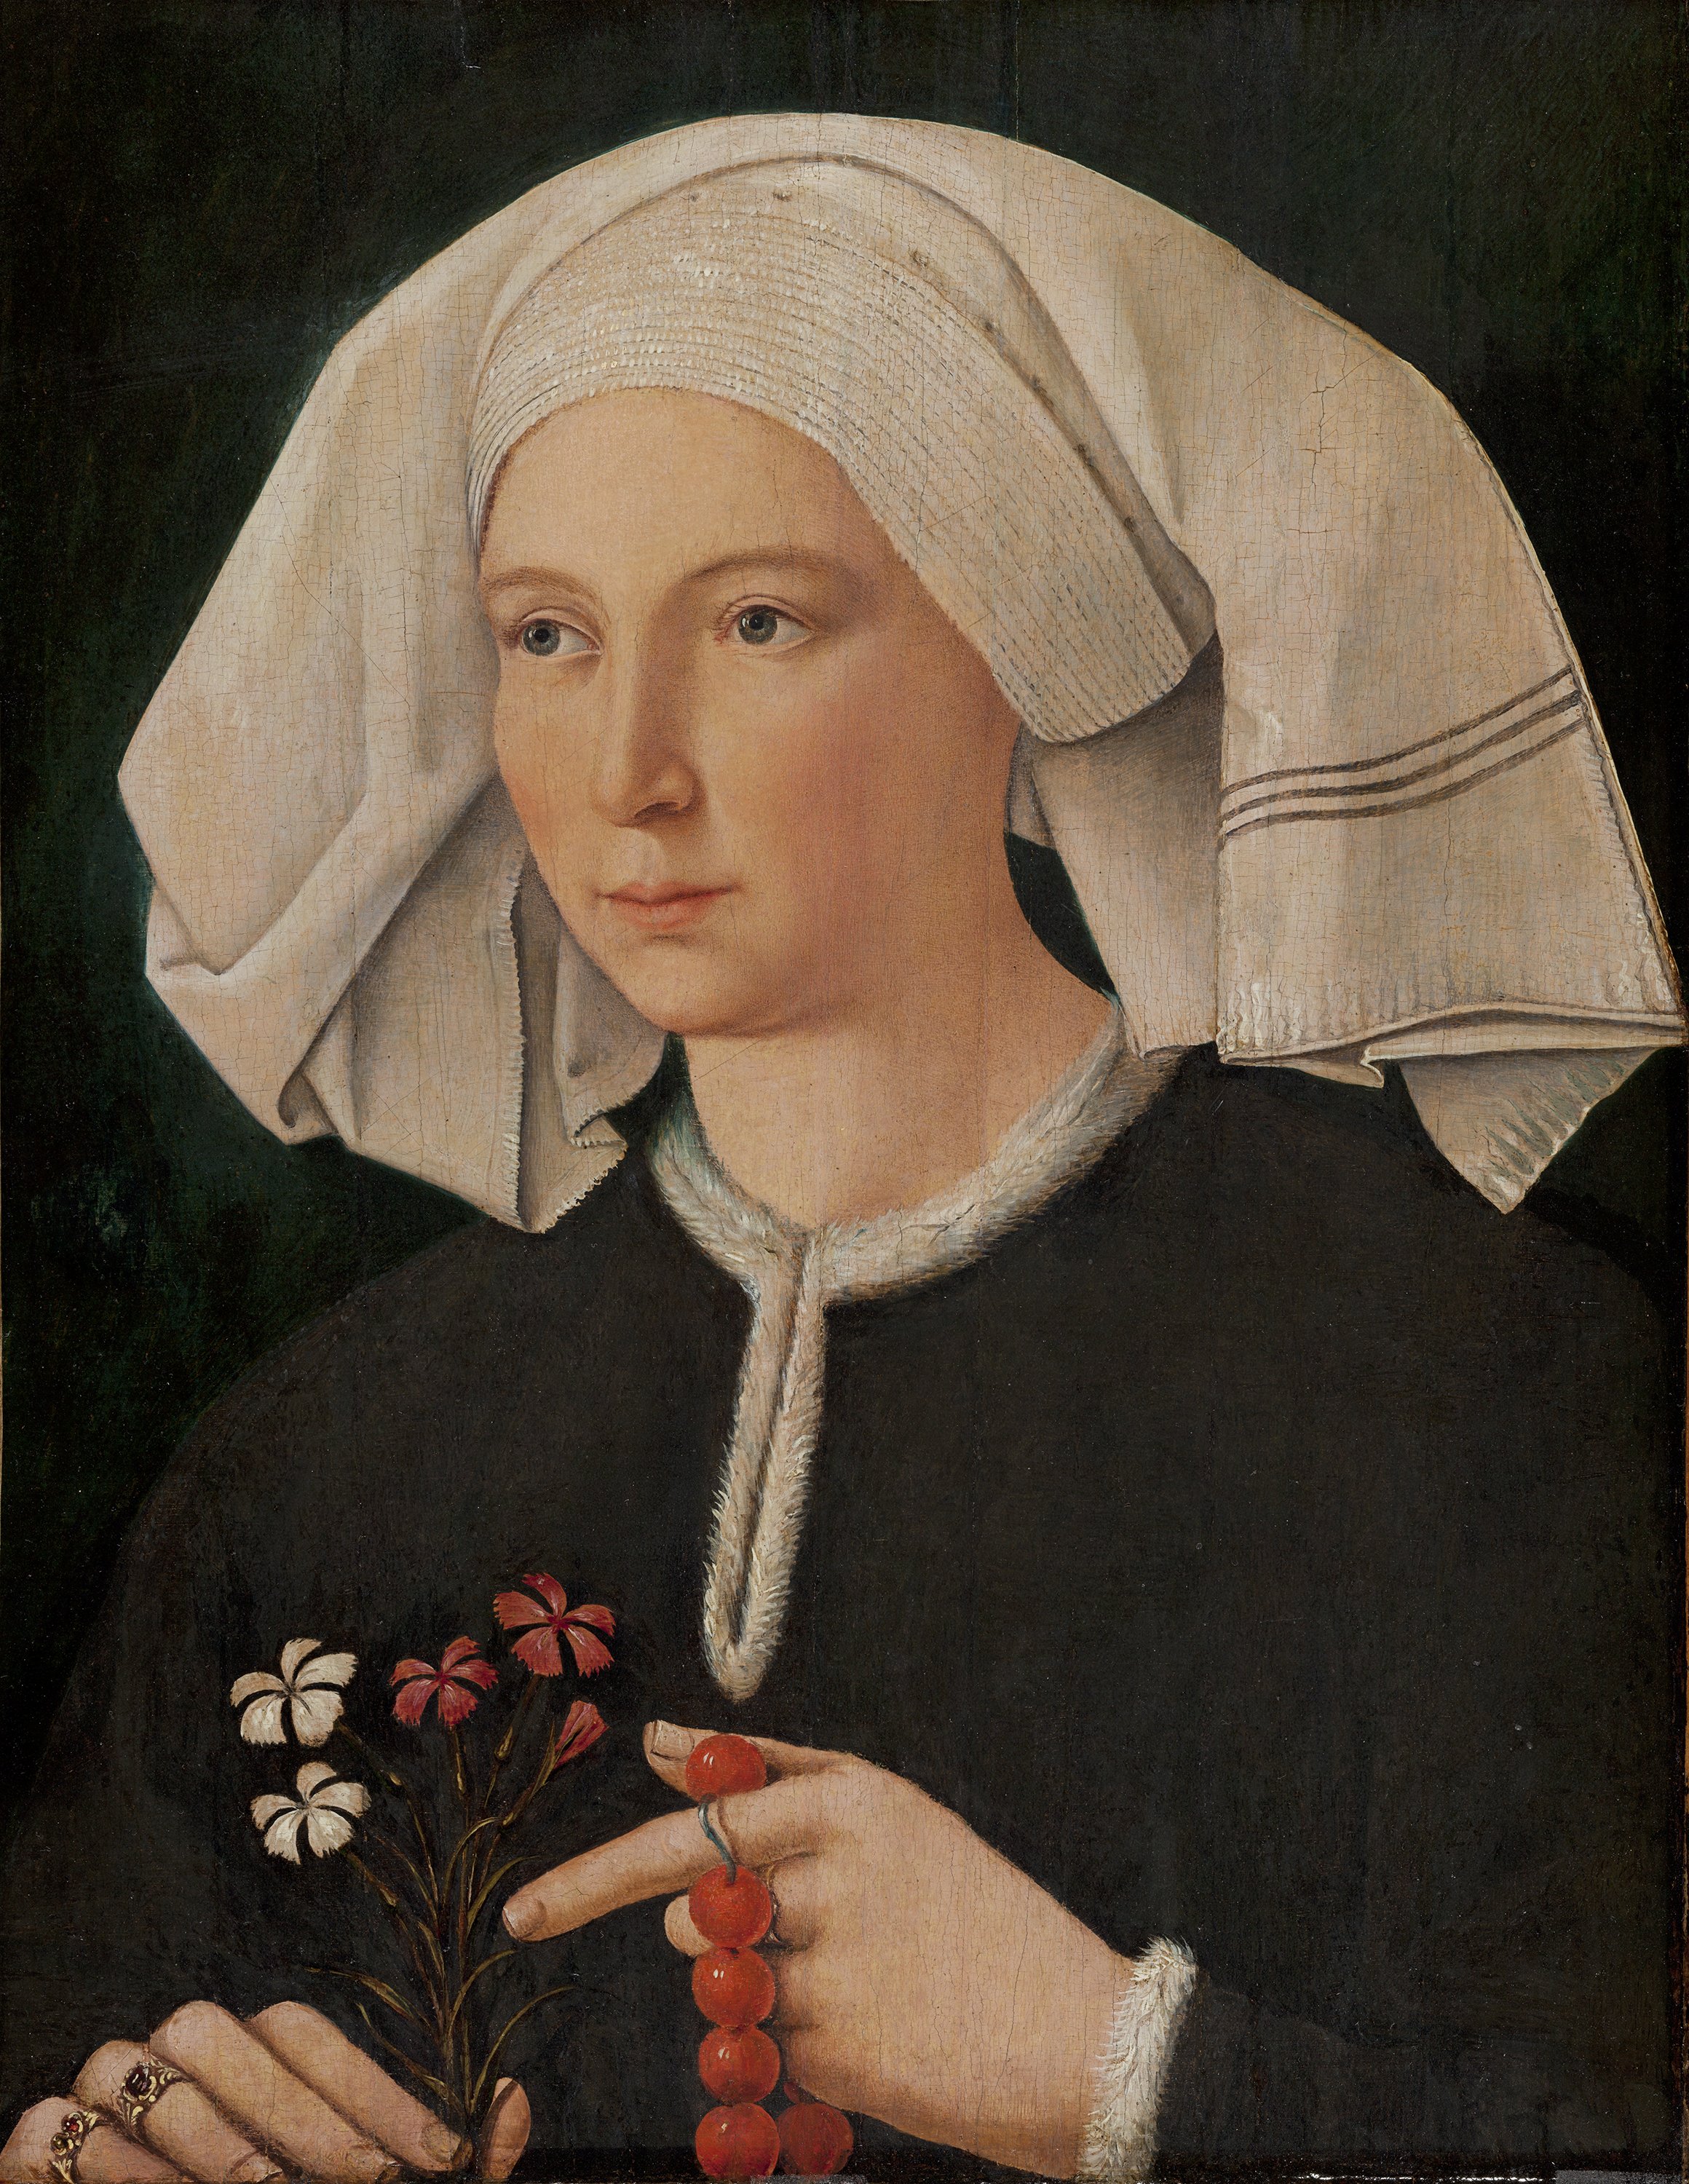 Portrait of a Woman. Retrato de una mujer, c. 1480